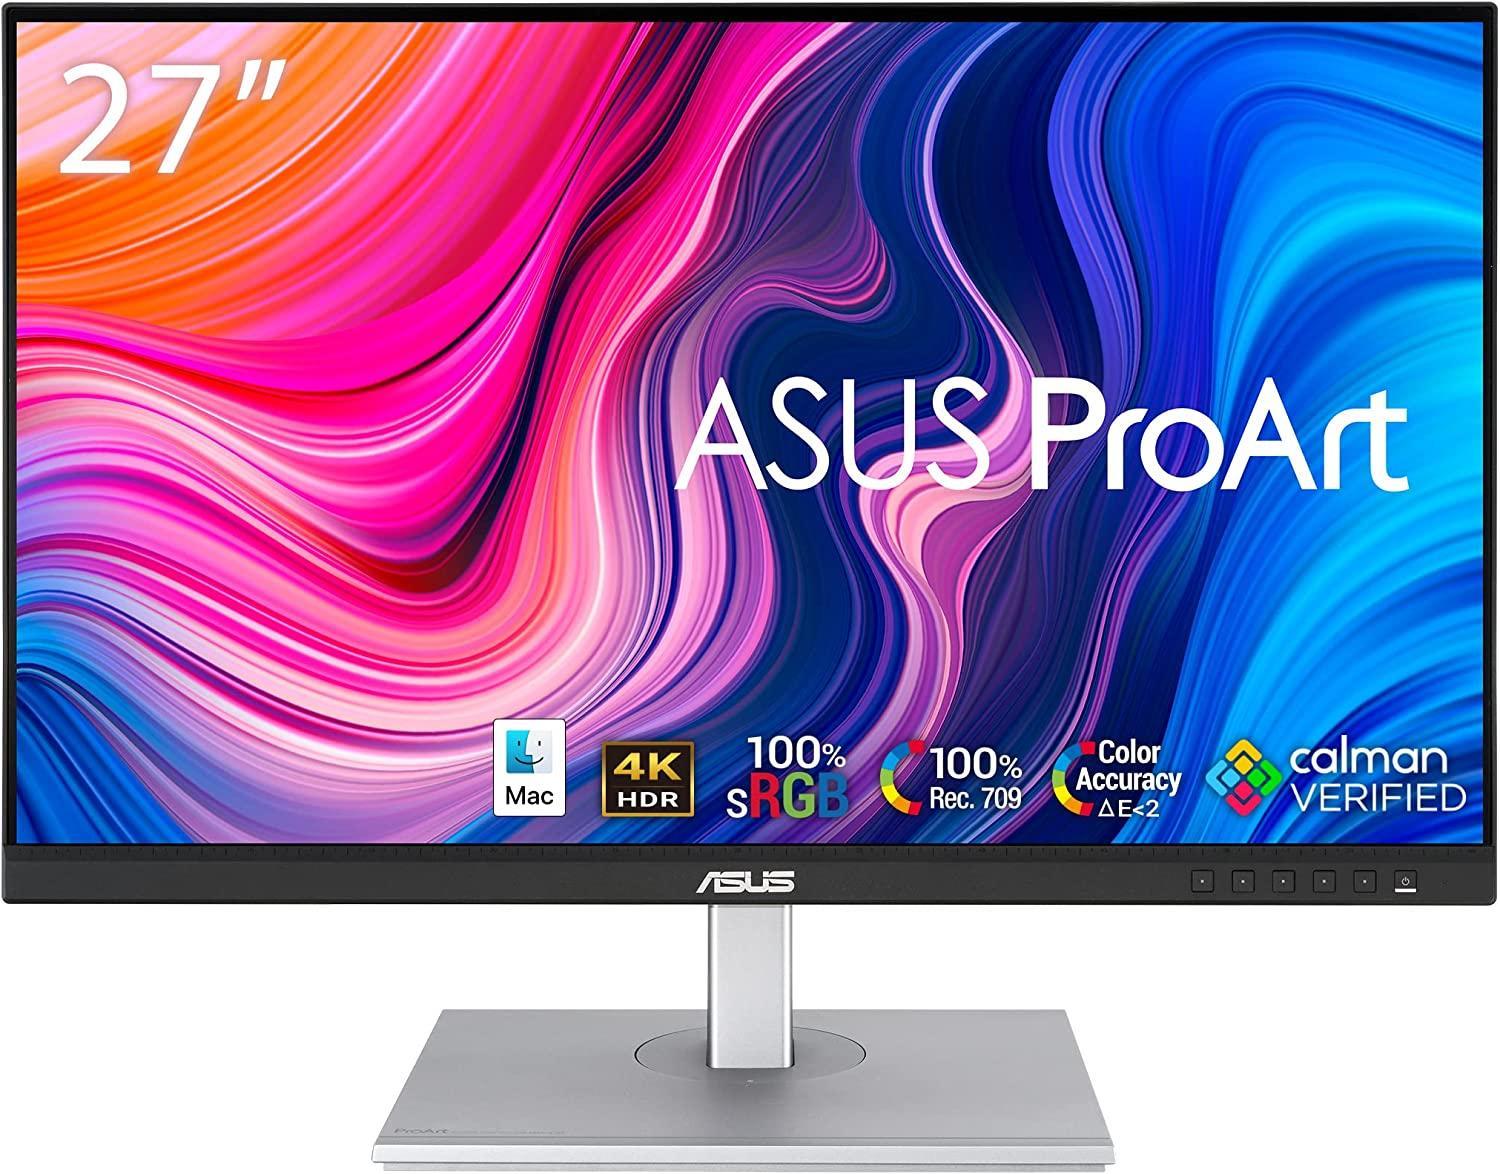 ASUS ProArt Display PA279CV 27” 4K HDR UHD (3840 x 2160) Monitor, IPS, 100% sRGB/Rec. 709, ΔE < 2, USB-C DisplayPort HDMI USB hub, Calman Verified, Compatible with Laptop & Mac Monitor